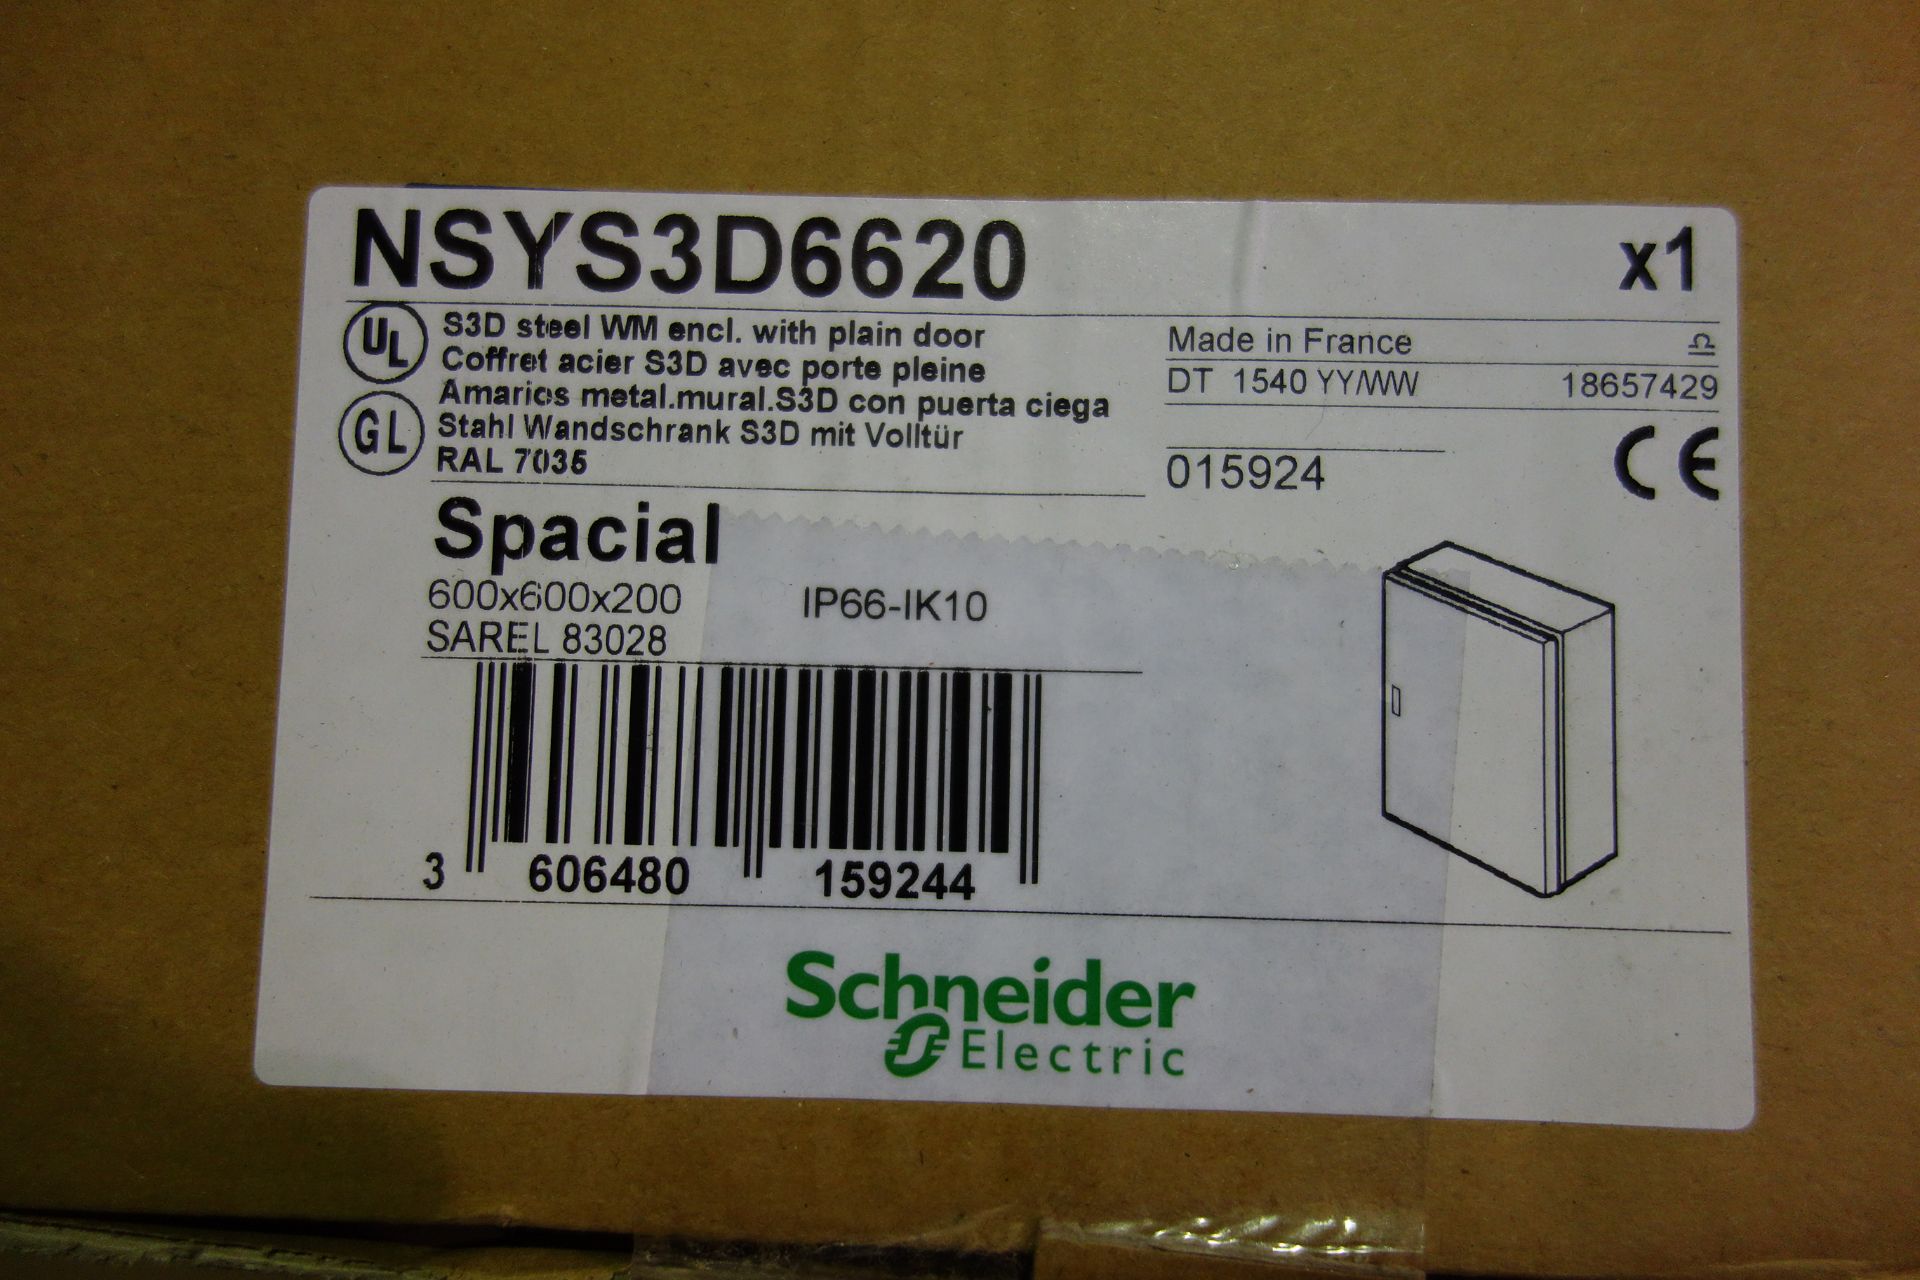 1 X Schneider NSYS3D6620 53D Steel WM Enclosure With Plain Door 600 X 600 X 200